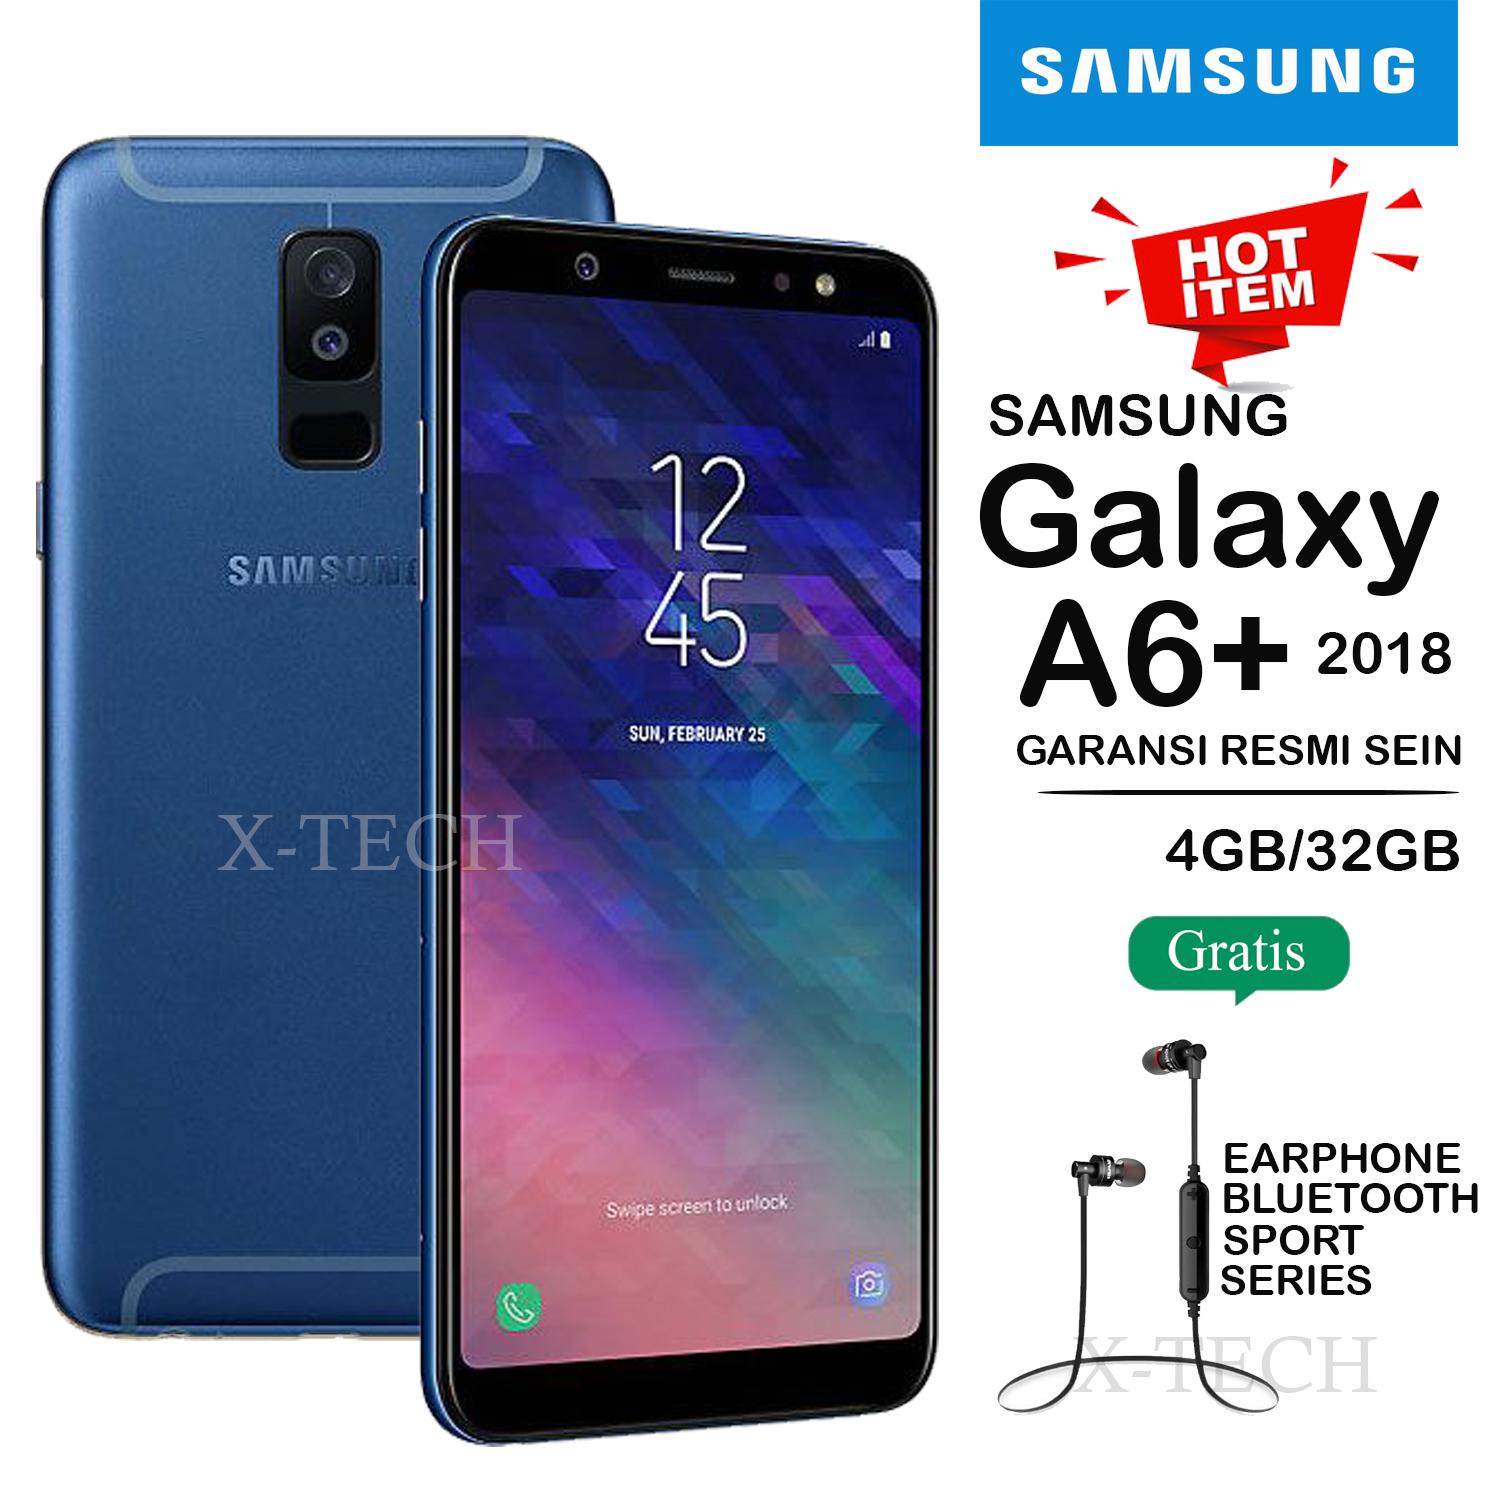 Samsung Galaxy A6+ / A6 Plus SM-A605 - Garansi Resmi